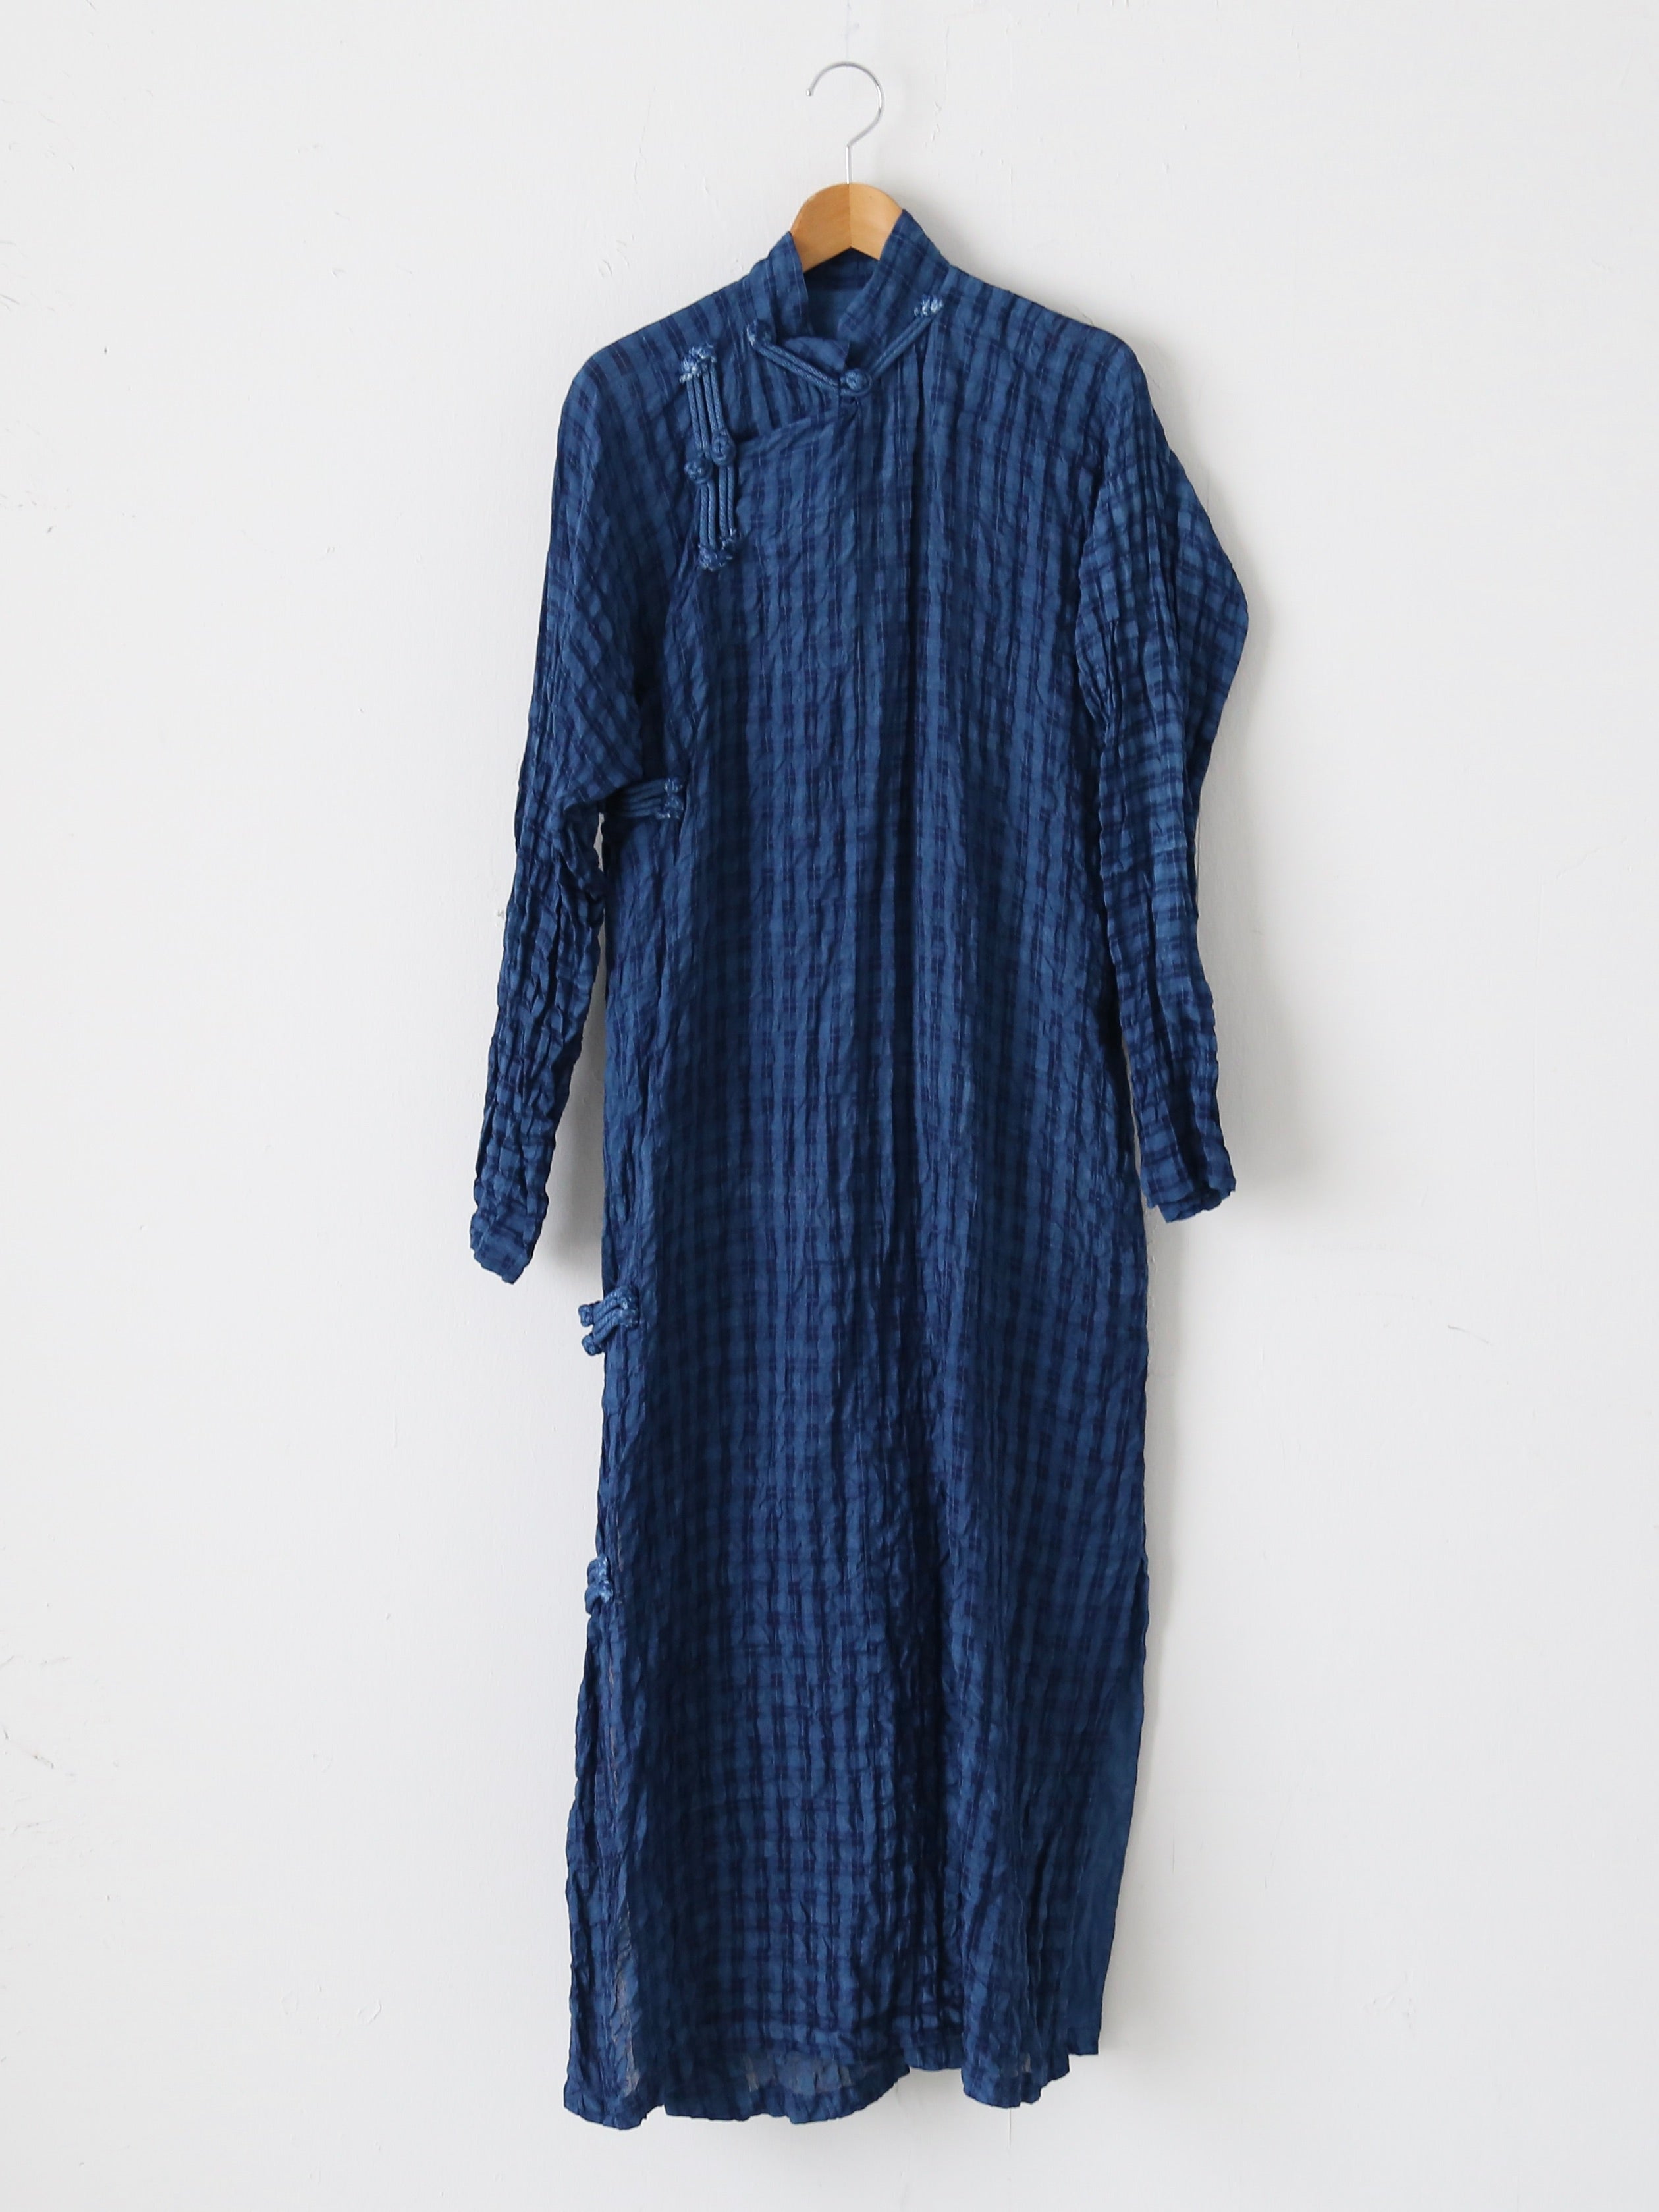 tao リネンキュプラチェック藍染ドレス [TM-O011-051]